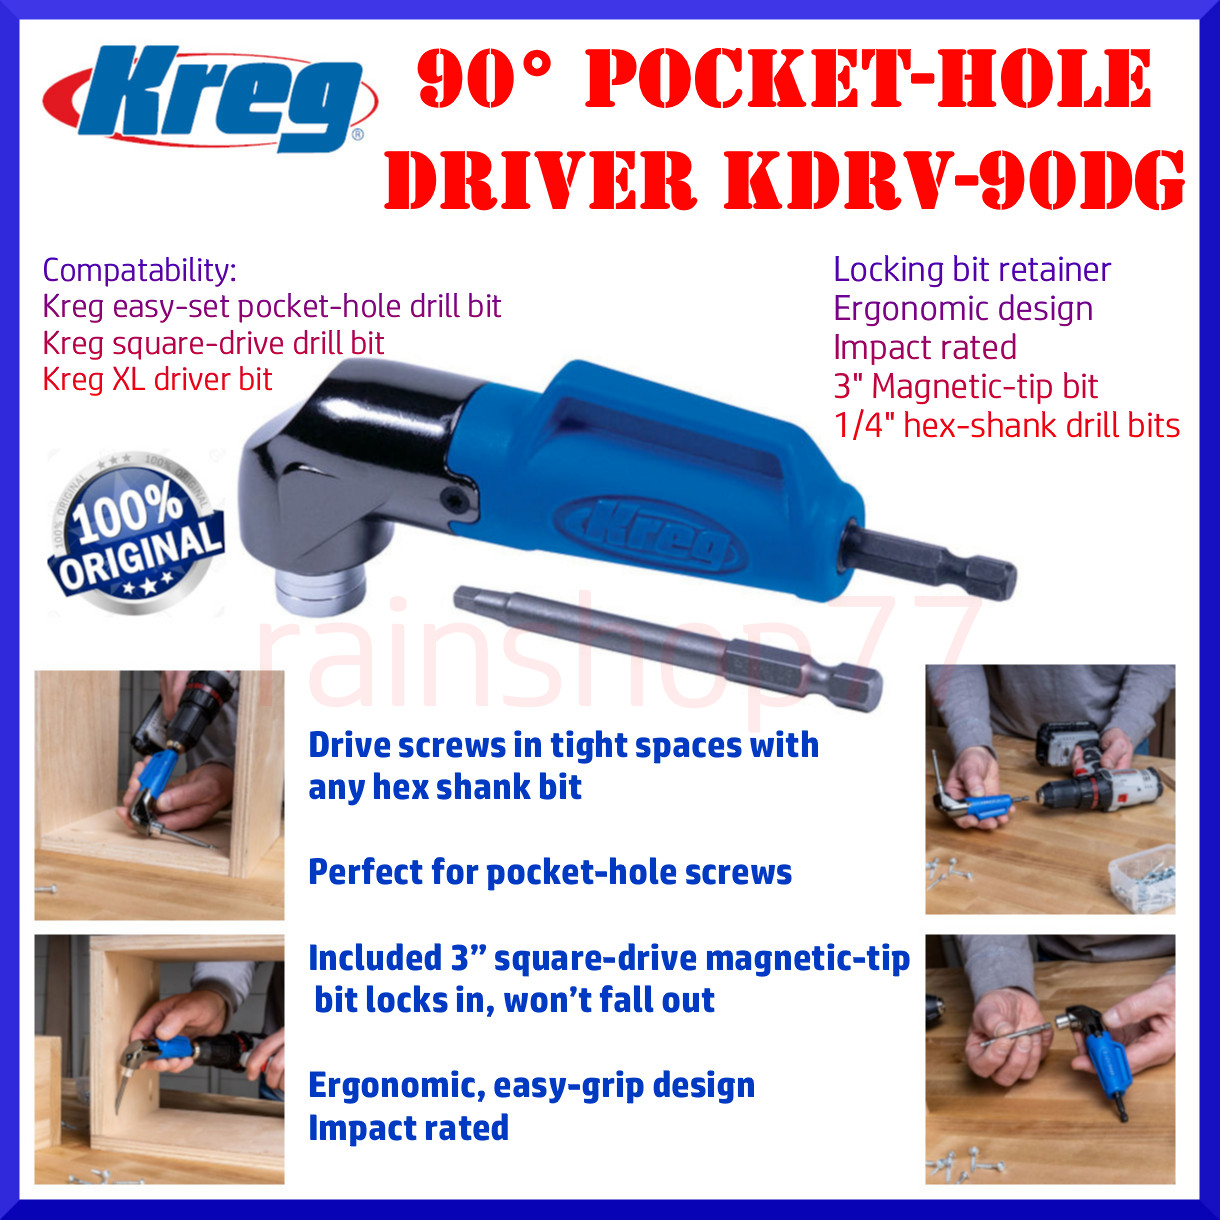 Kreg 90° Pocket Hole Driver 90 degrees Pockethole Drill Driver KDRV-90DG